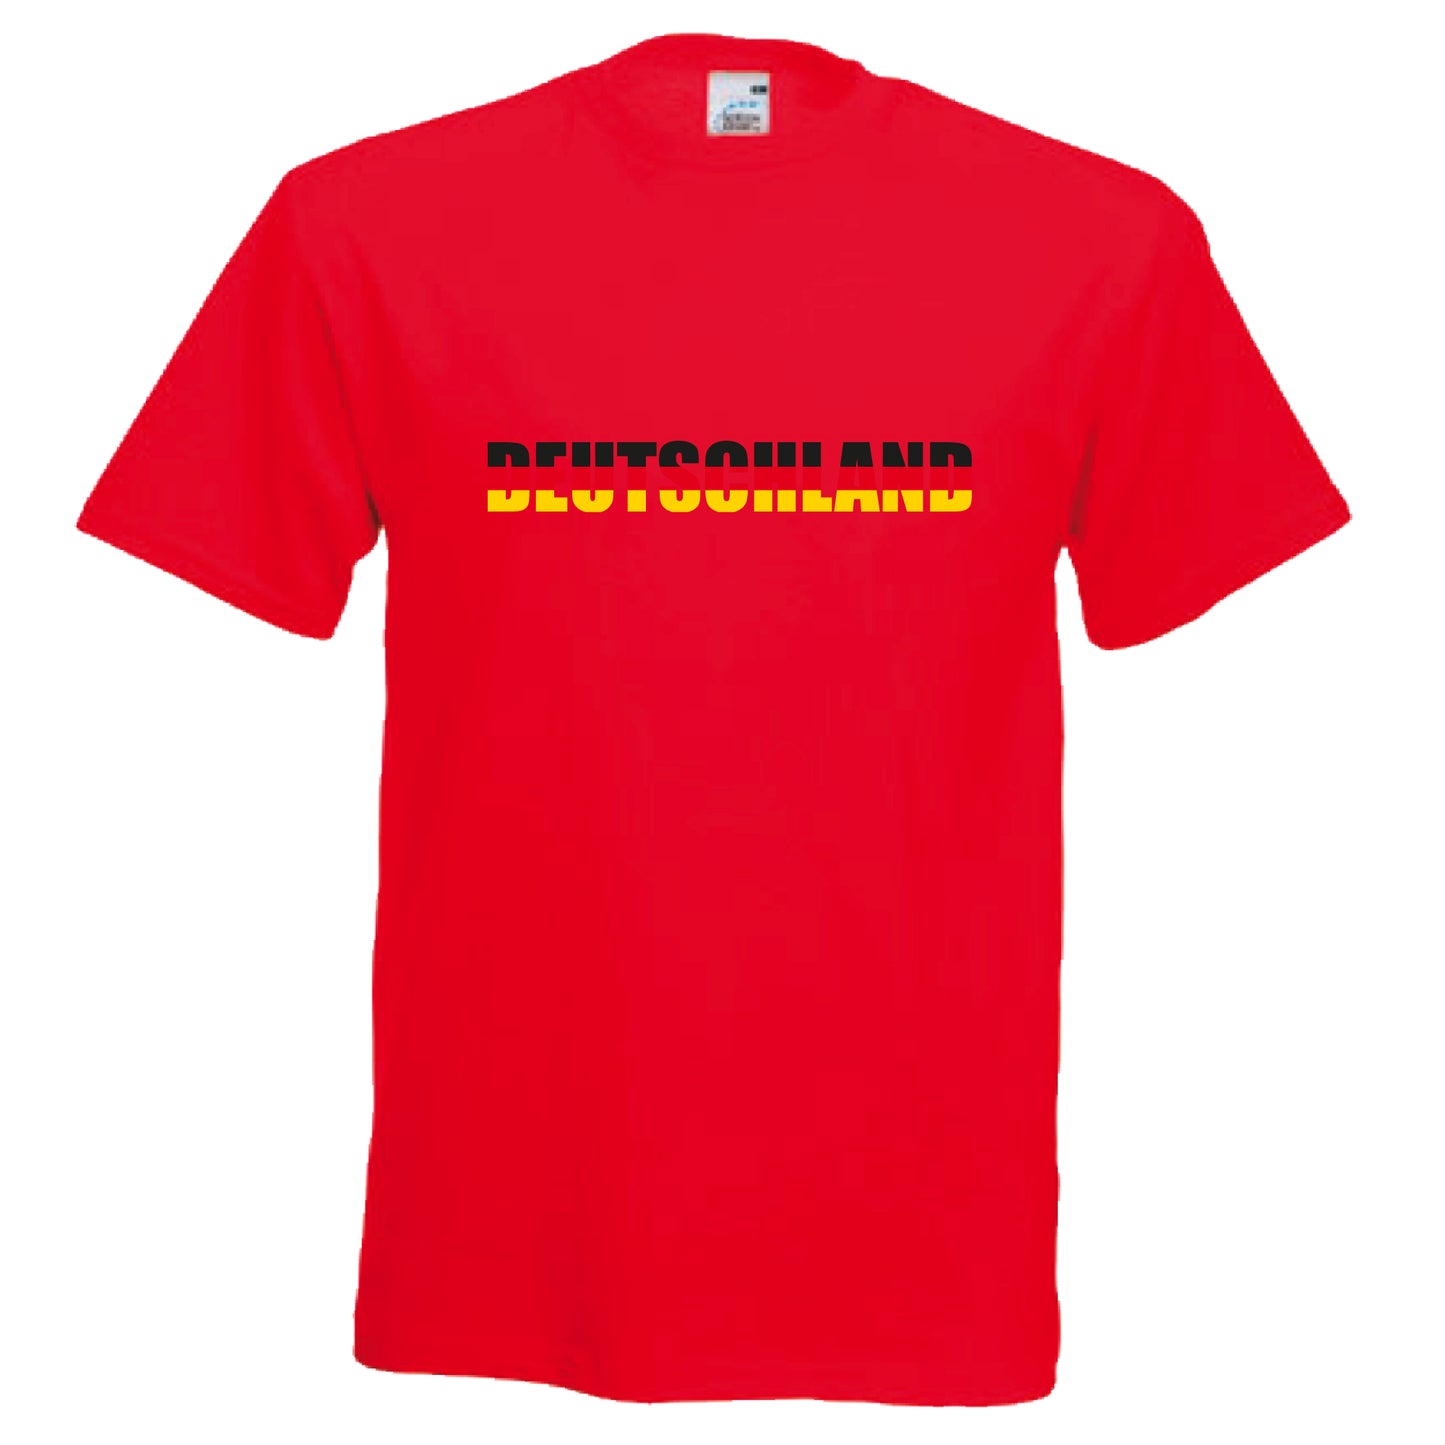 INDIGOS UG - T-Shirt Herren - Deutschland - Schriftzug - Fussball